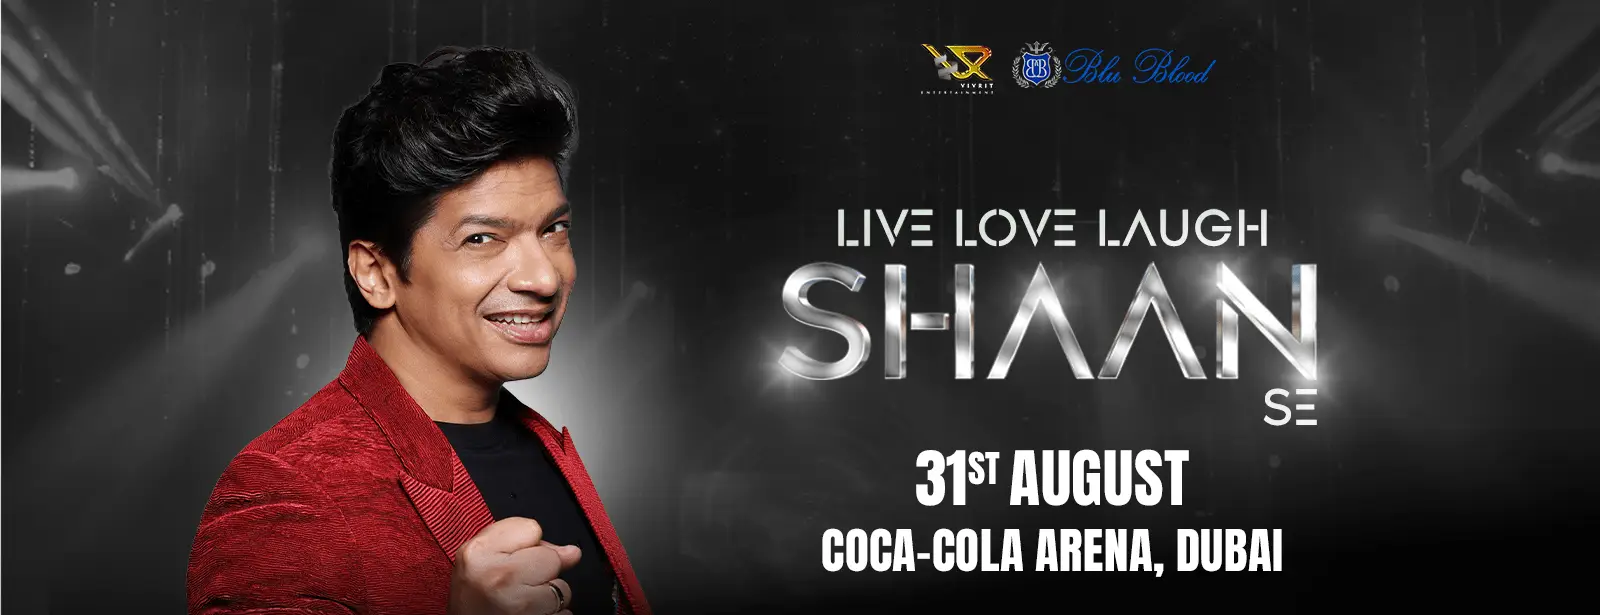 Live Love Laugh Shaan Se Live at Coca-Cola Arena, Dubai || Wow-Emirates